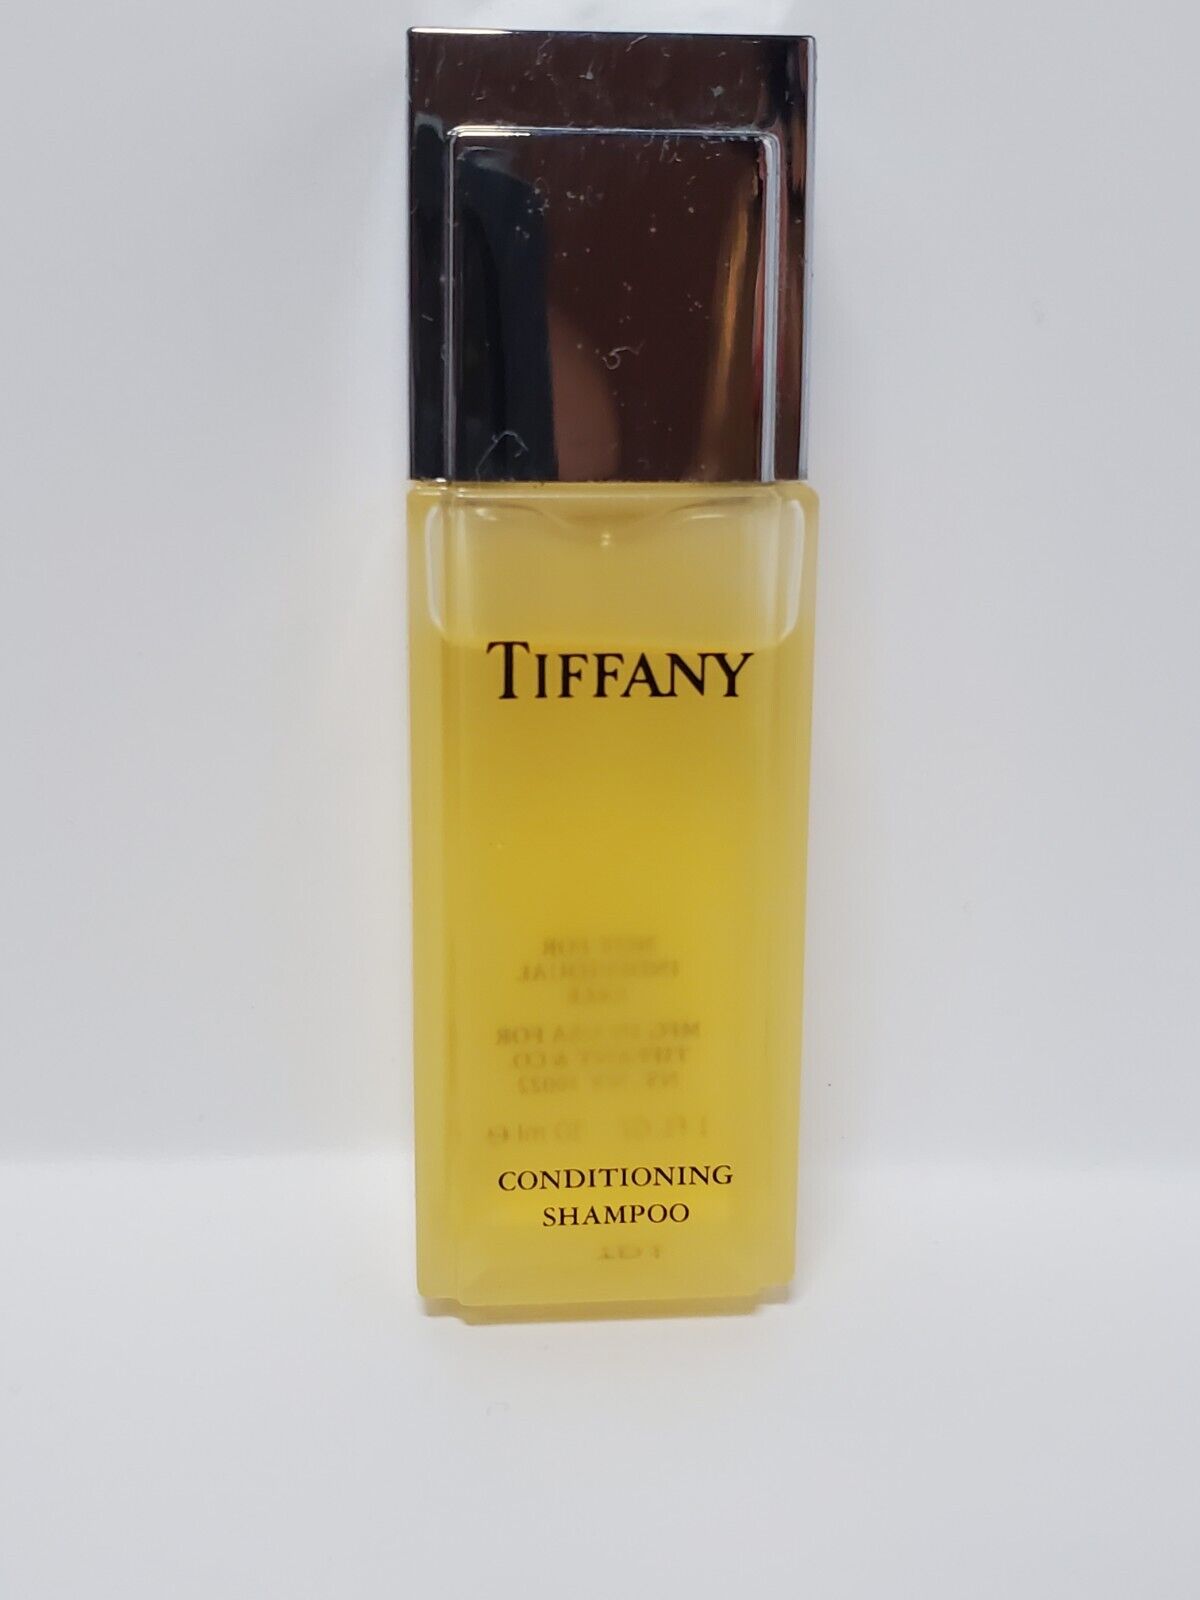 Vintage Tiffany Conditioning Shampoo  1 Fluid Oz 30ml 